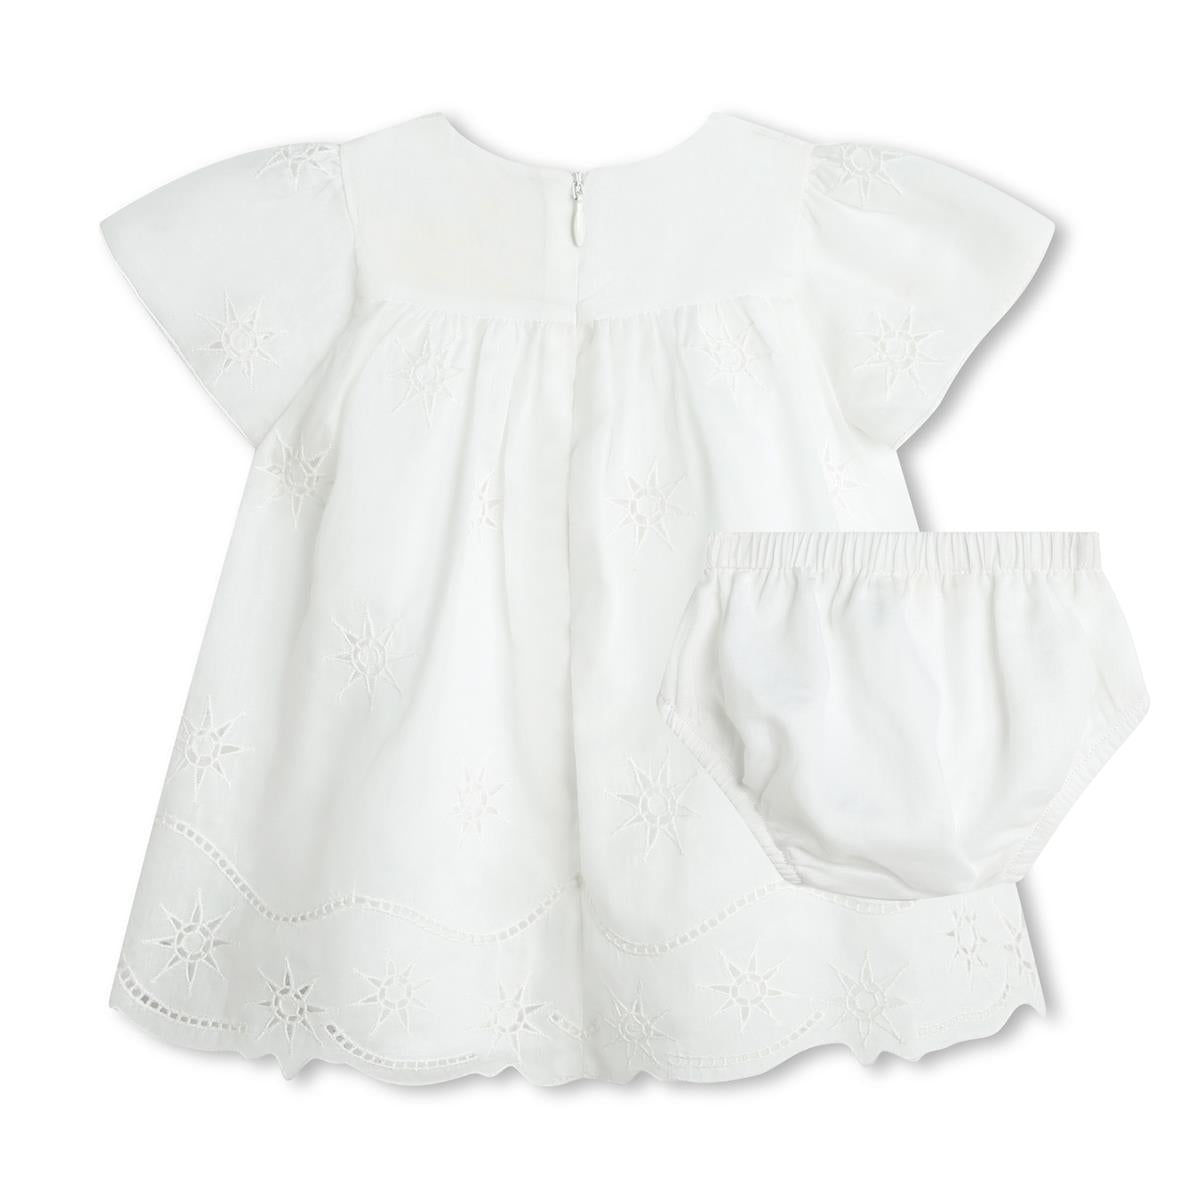 Baby Girls White Cotton Dress Set